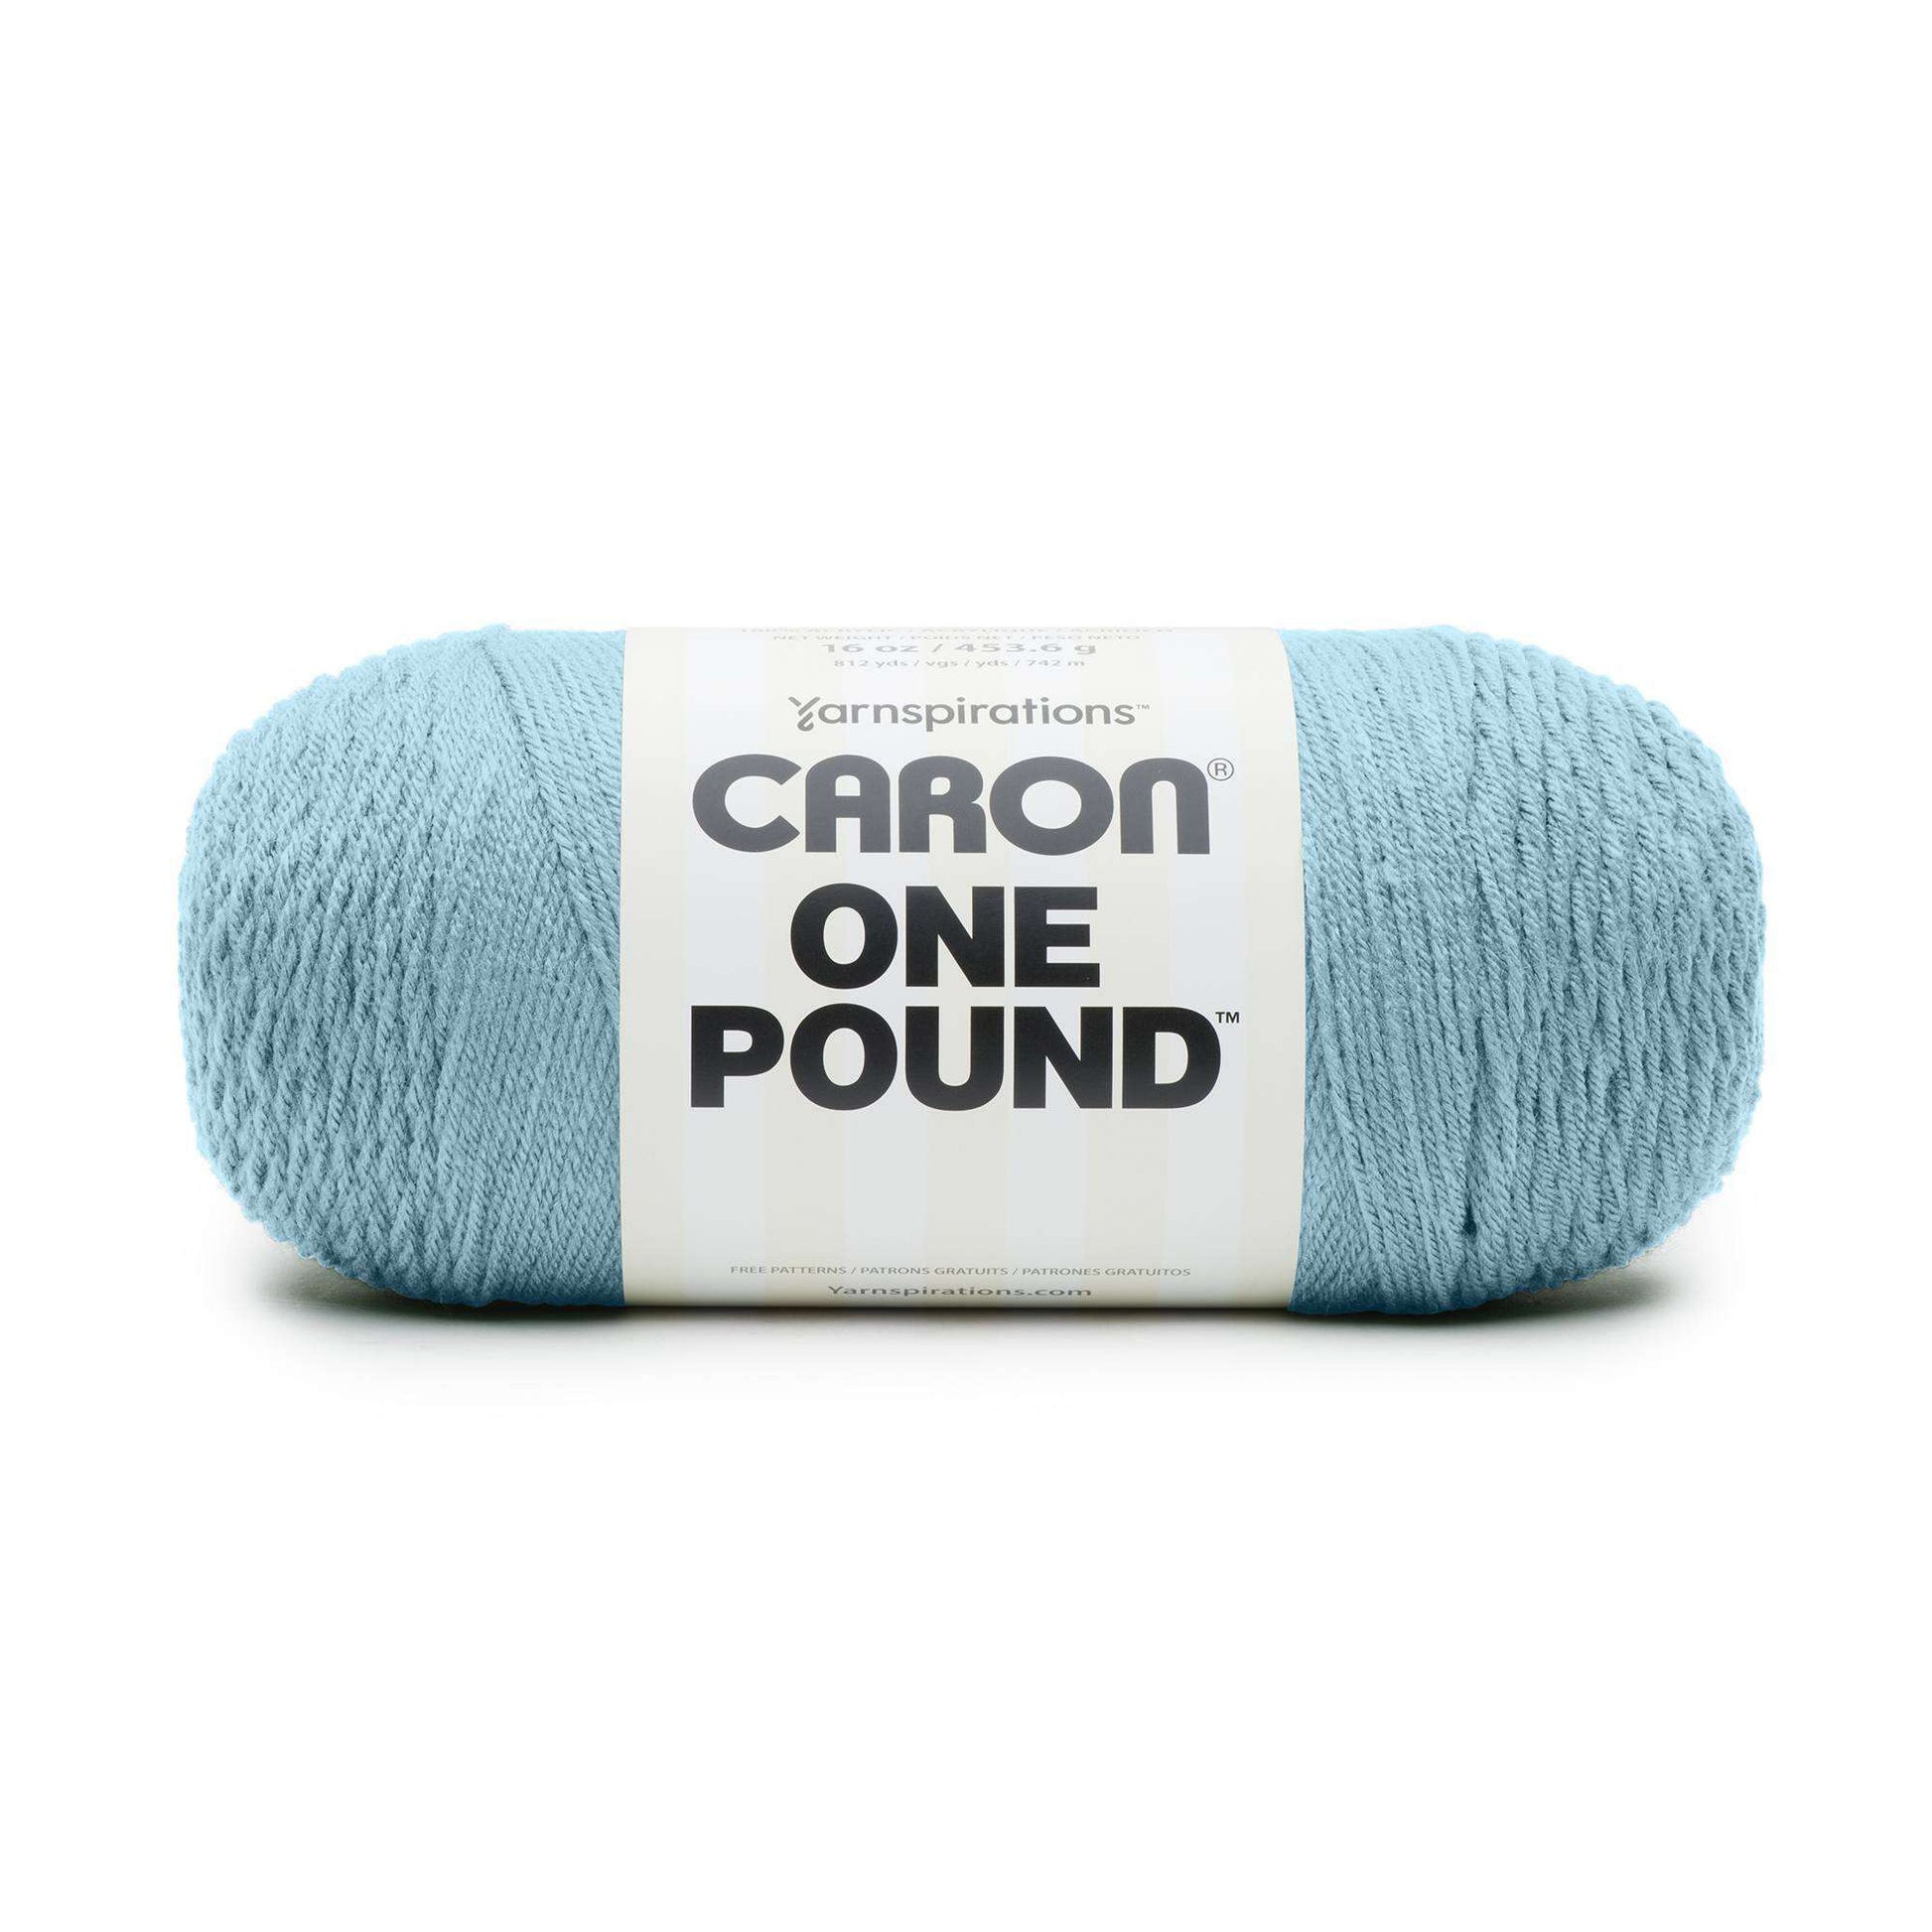 Caron One Pound Midnight Blue Yarn - 2 Pack of 454g/16oz - Acrylic